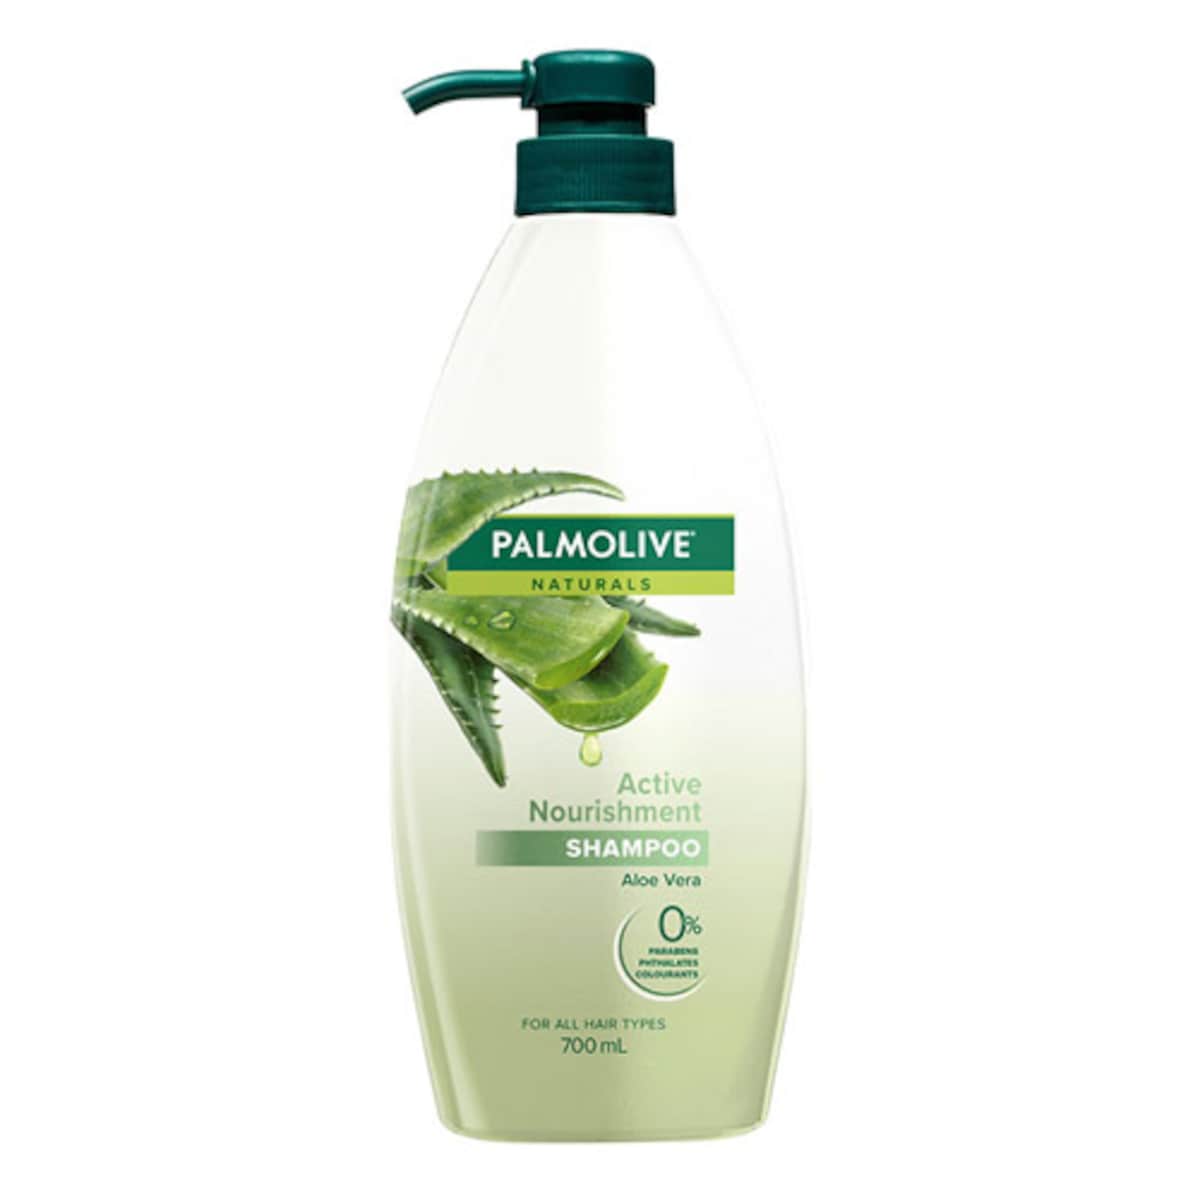 Palmolive Active Nourishment Shampoo Aloe Vera 700ml